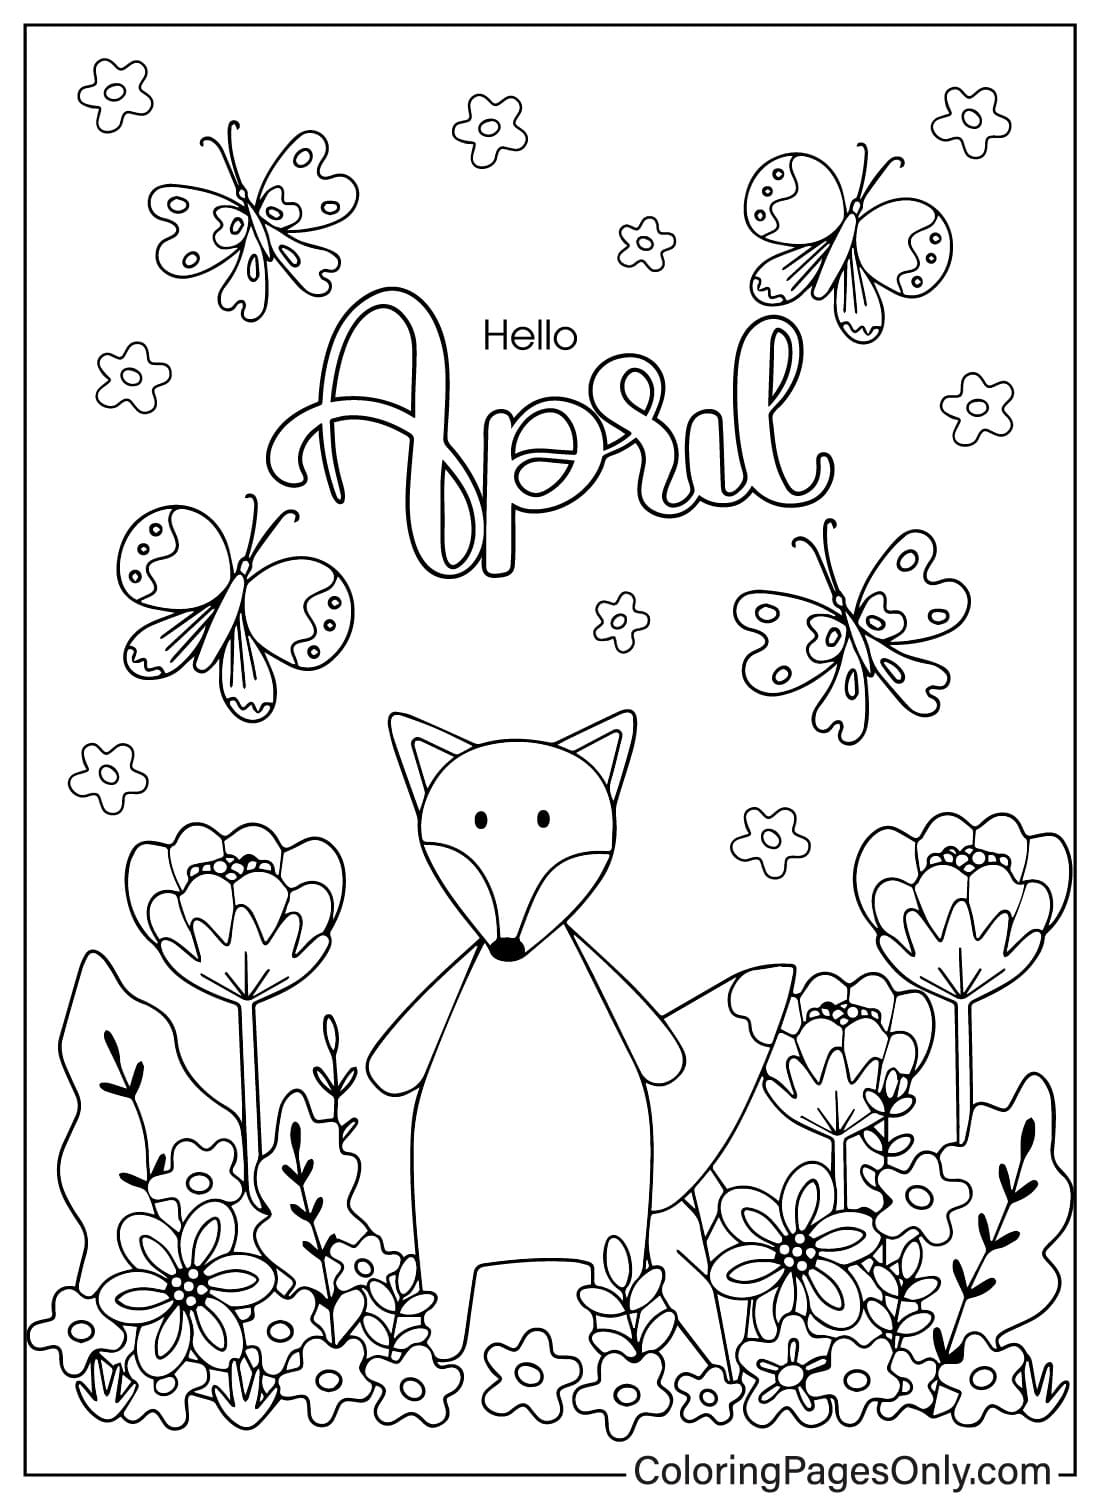 Página para colorear de abril gratis a partir de abril de 2024